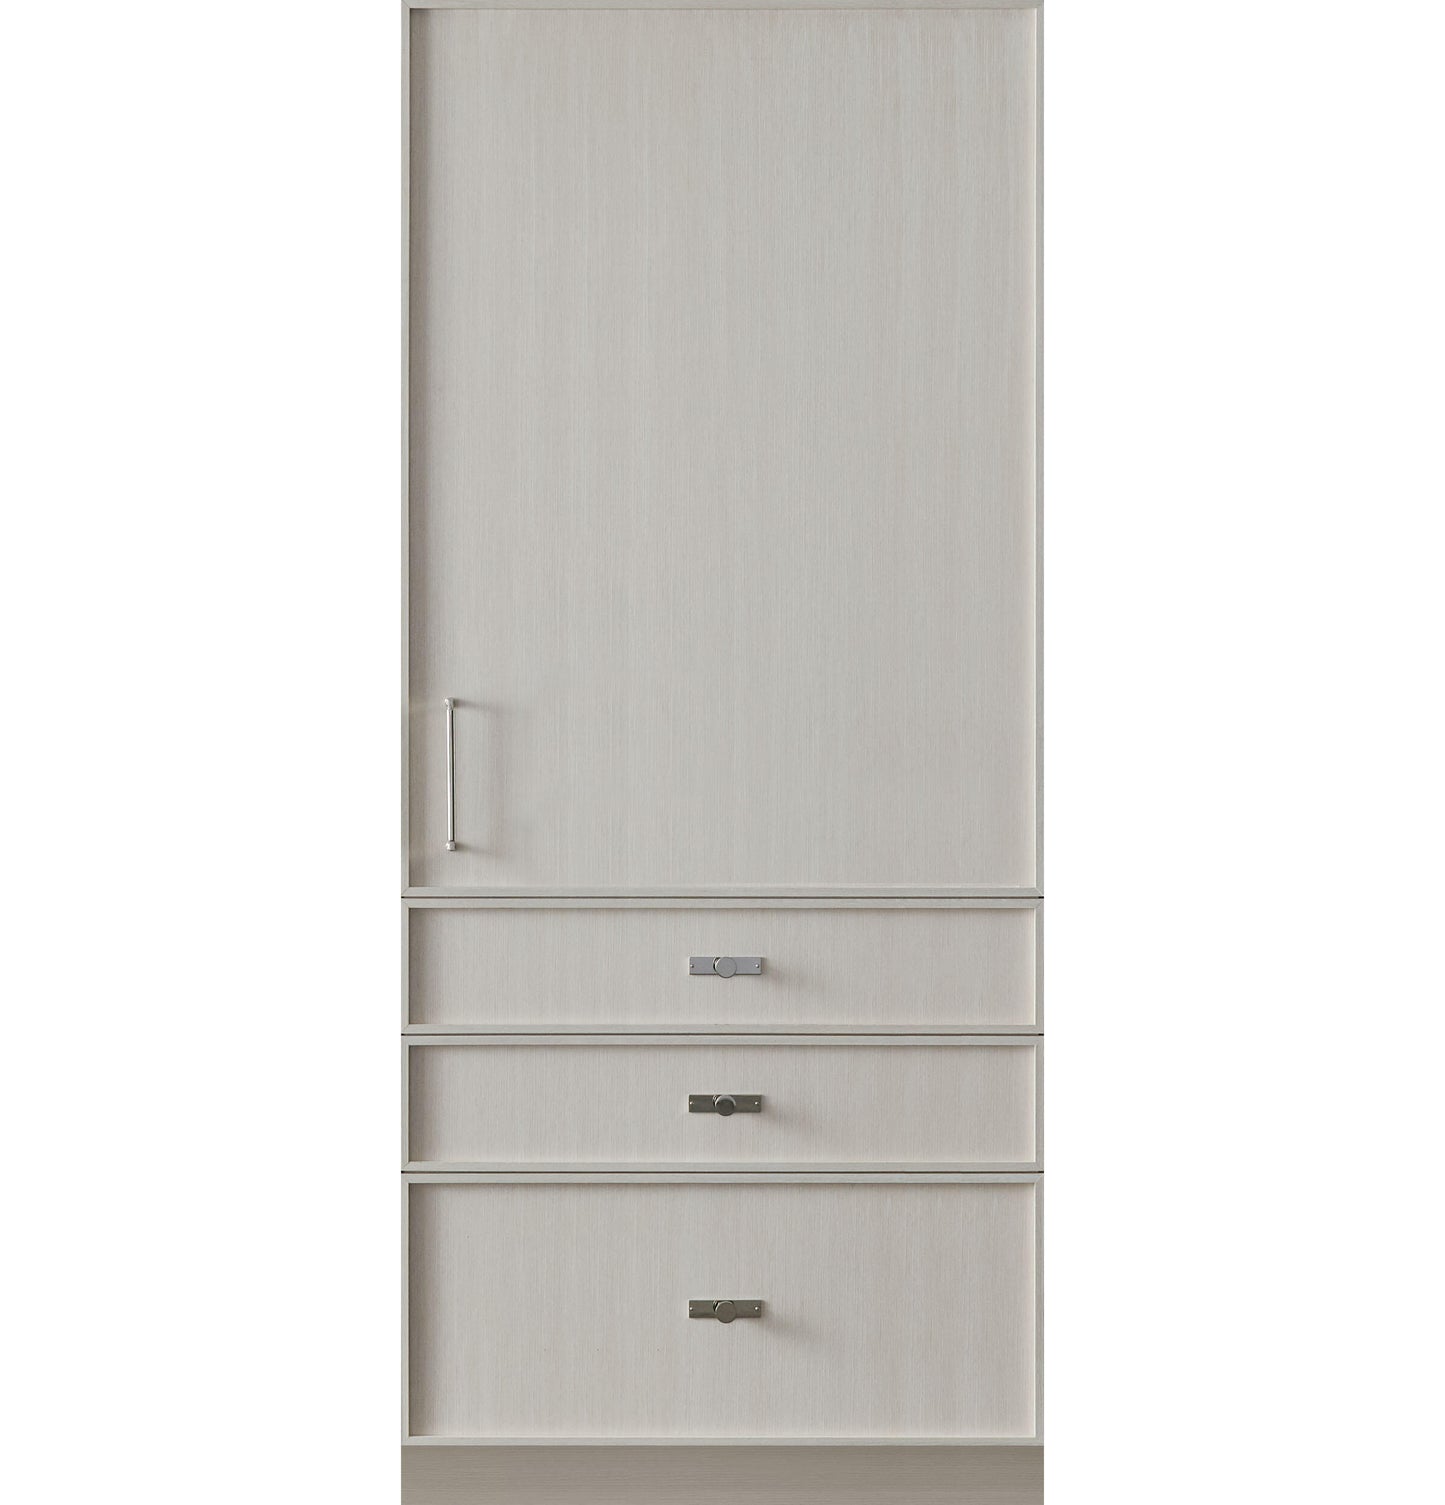 Monogram ZIR361NBRII Monogram 36" Integrated Column Refrigerator